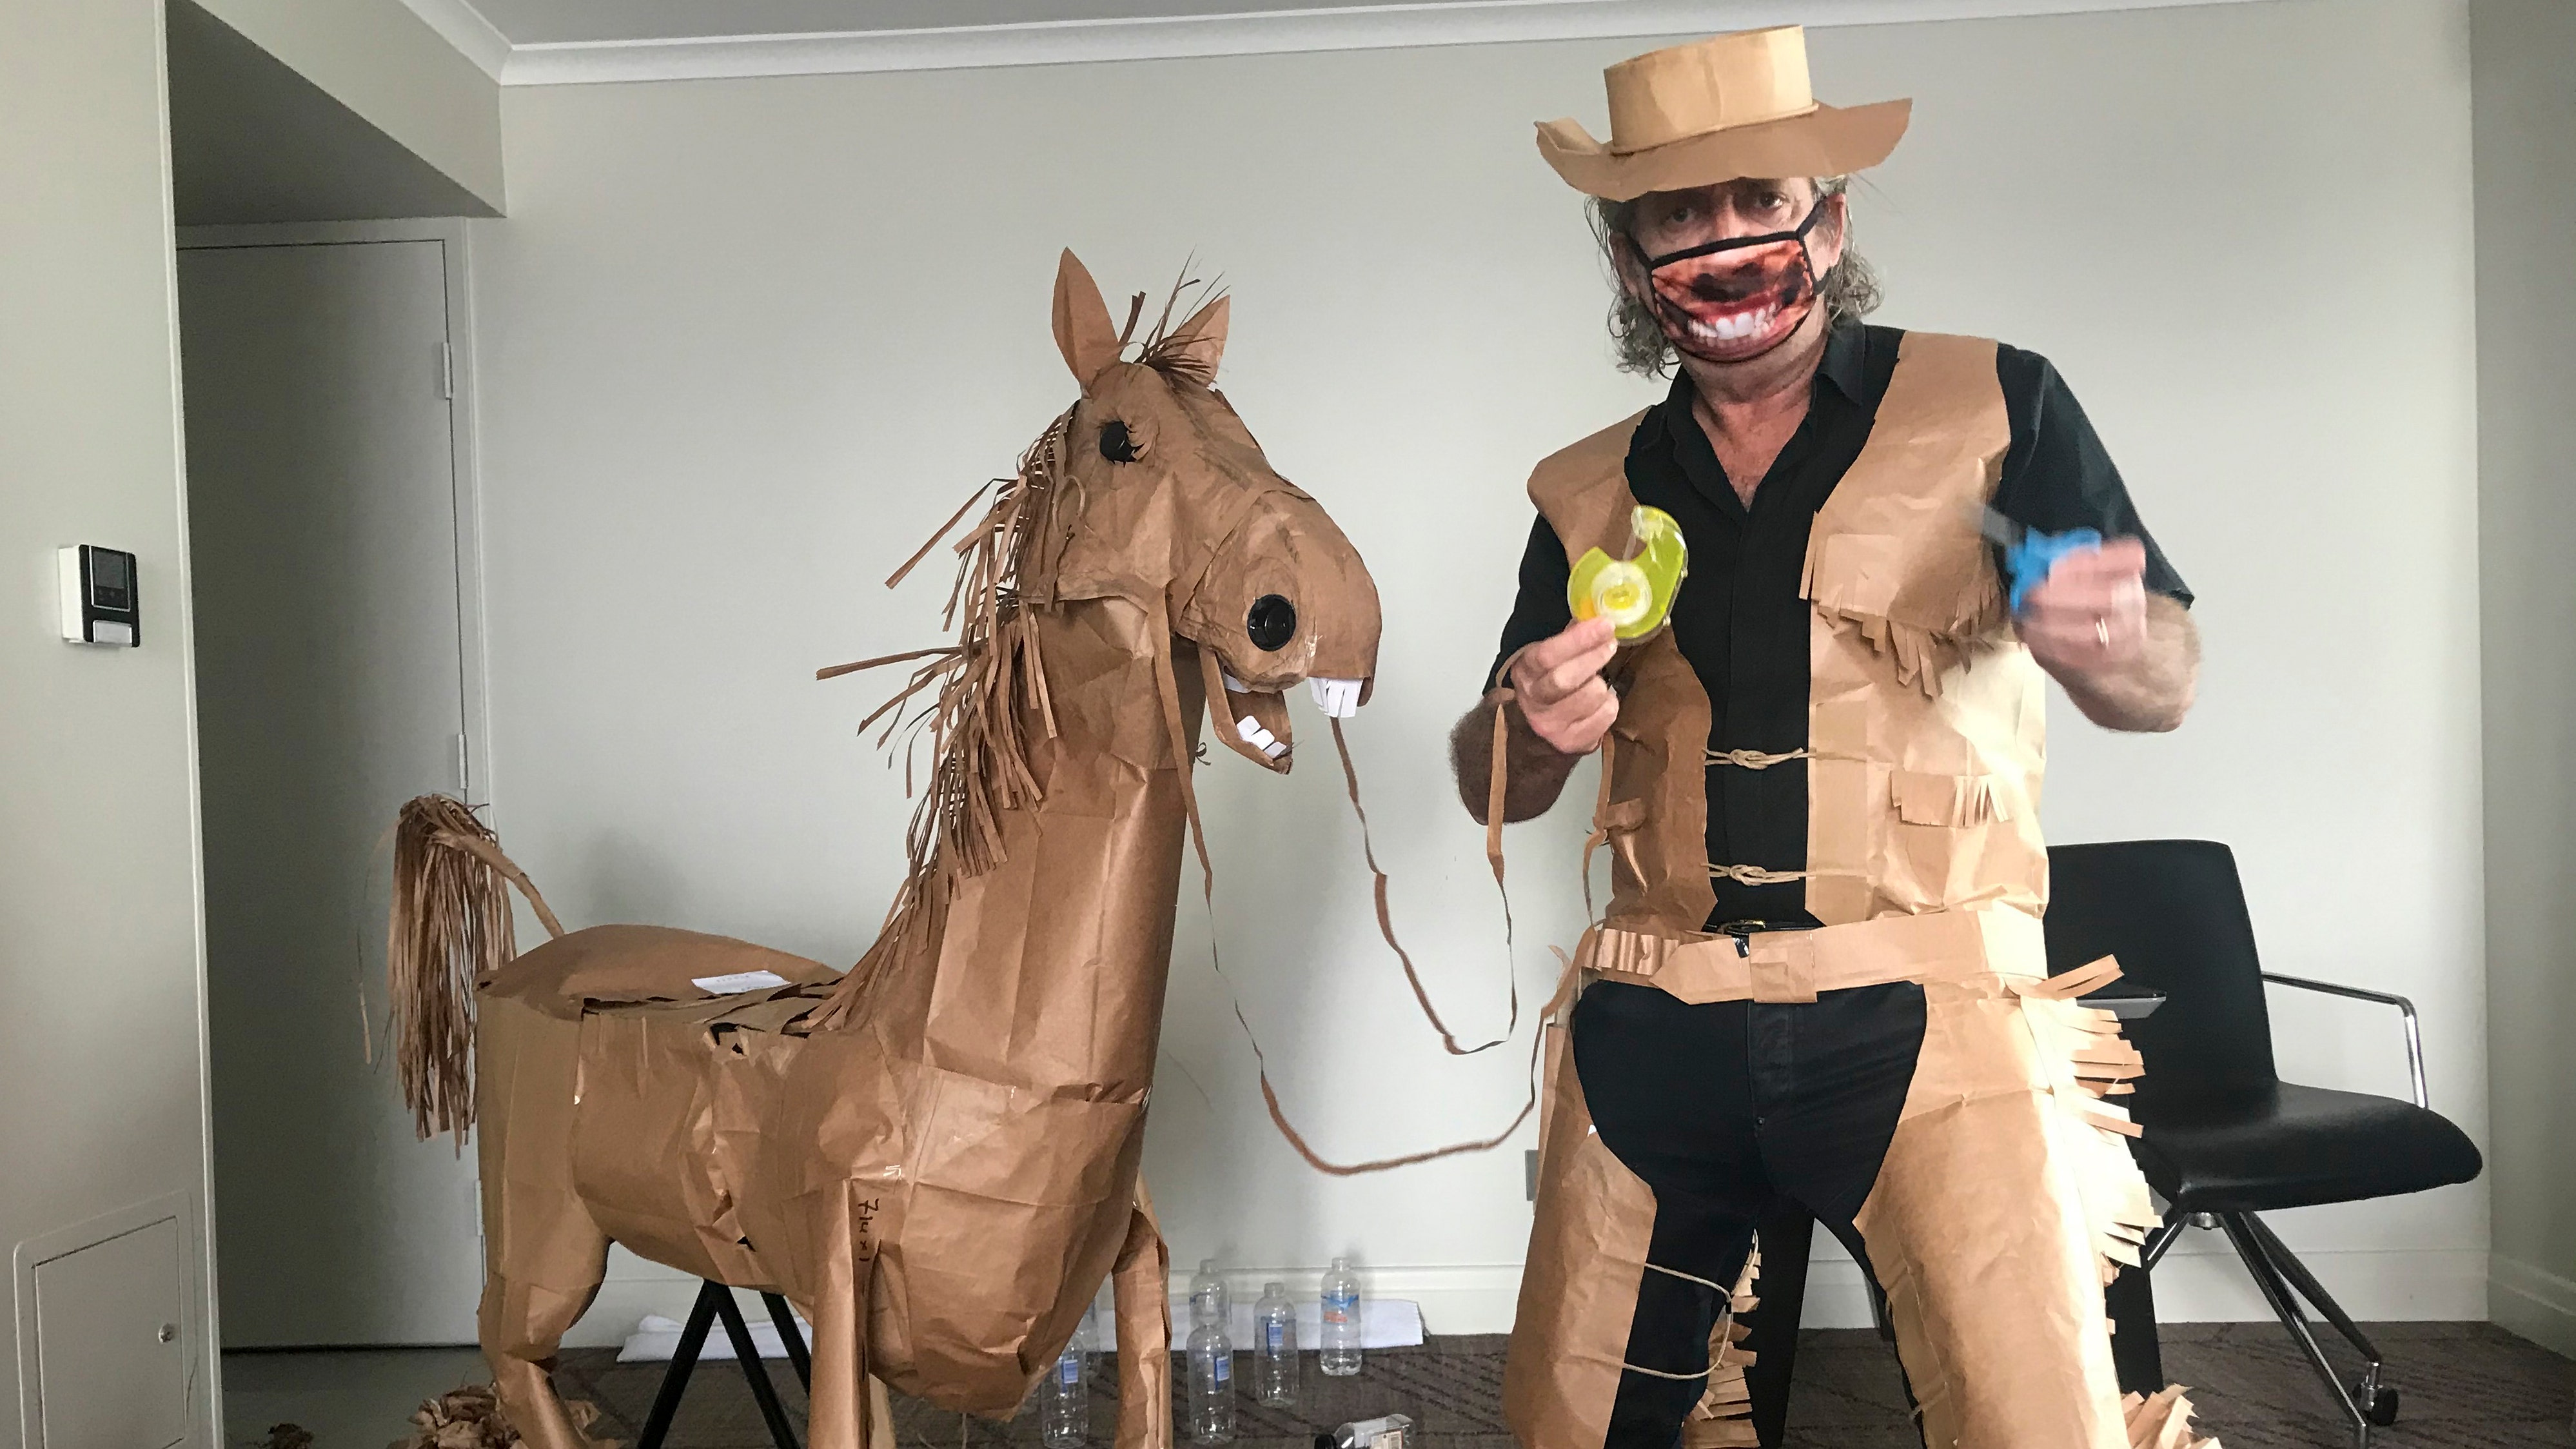 Man becomes 'cowboy,' makes paper horse during Australian quarantine